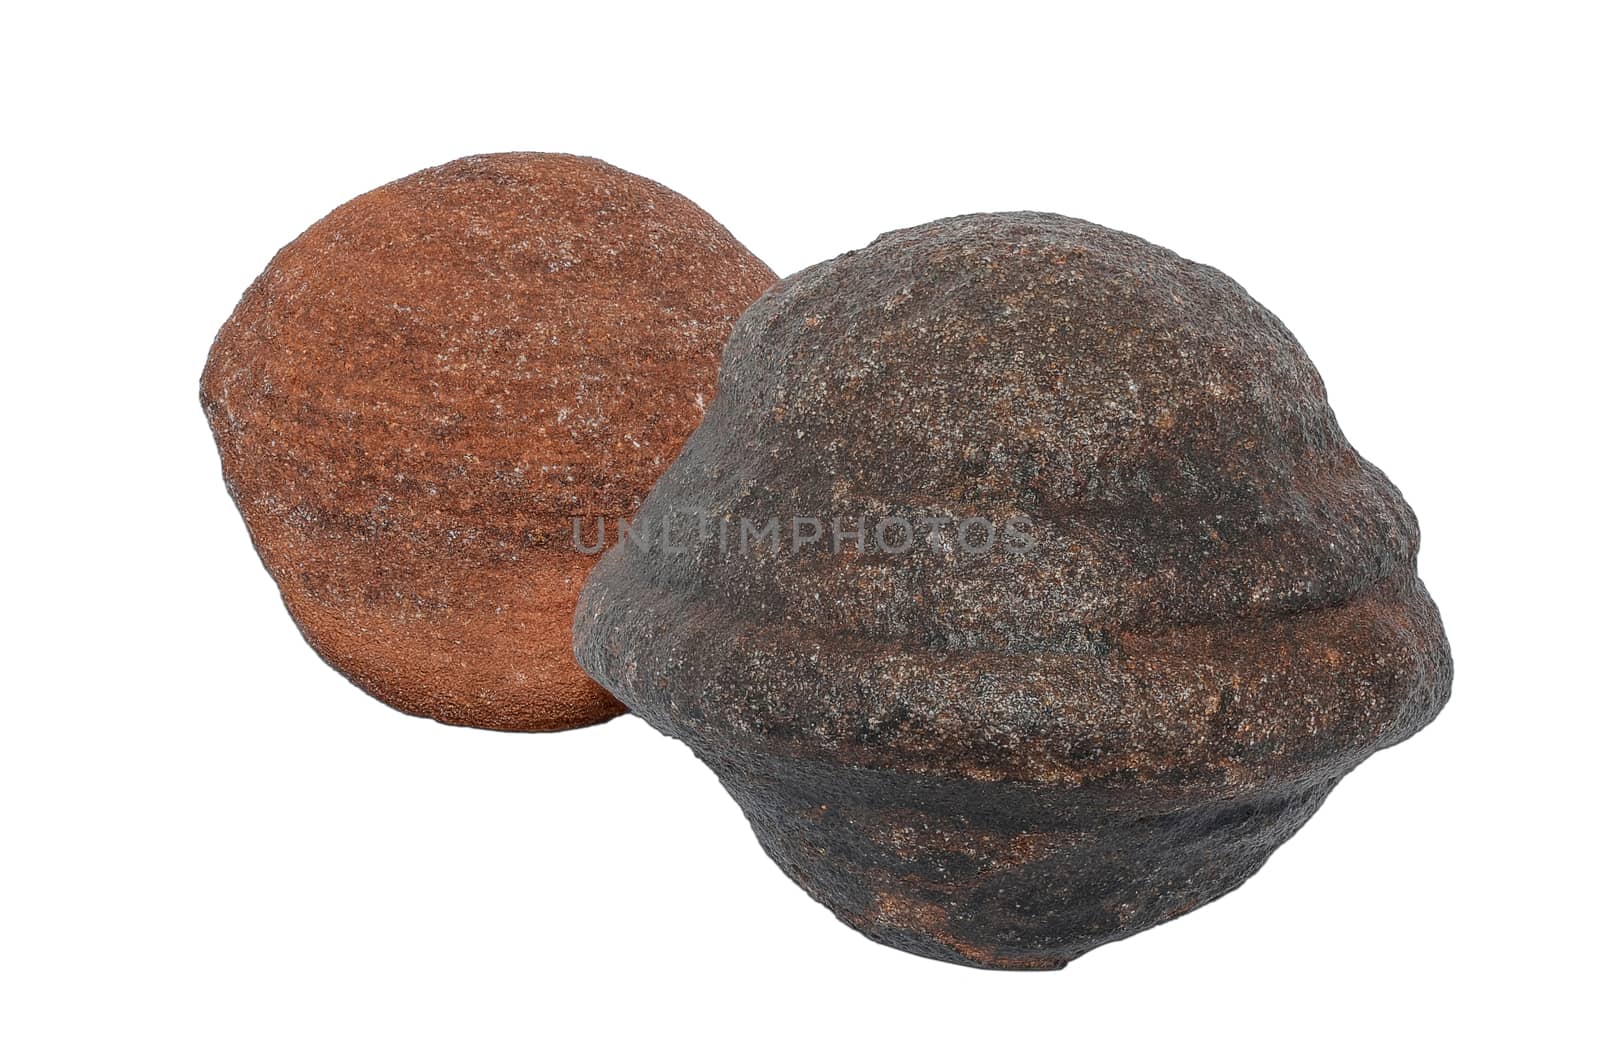 Moqui Marbles - Boji stones by stellar